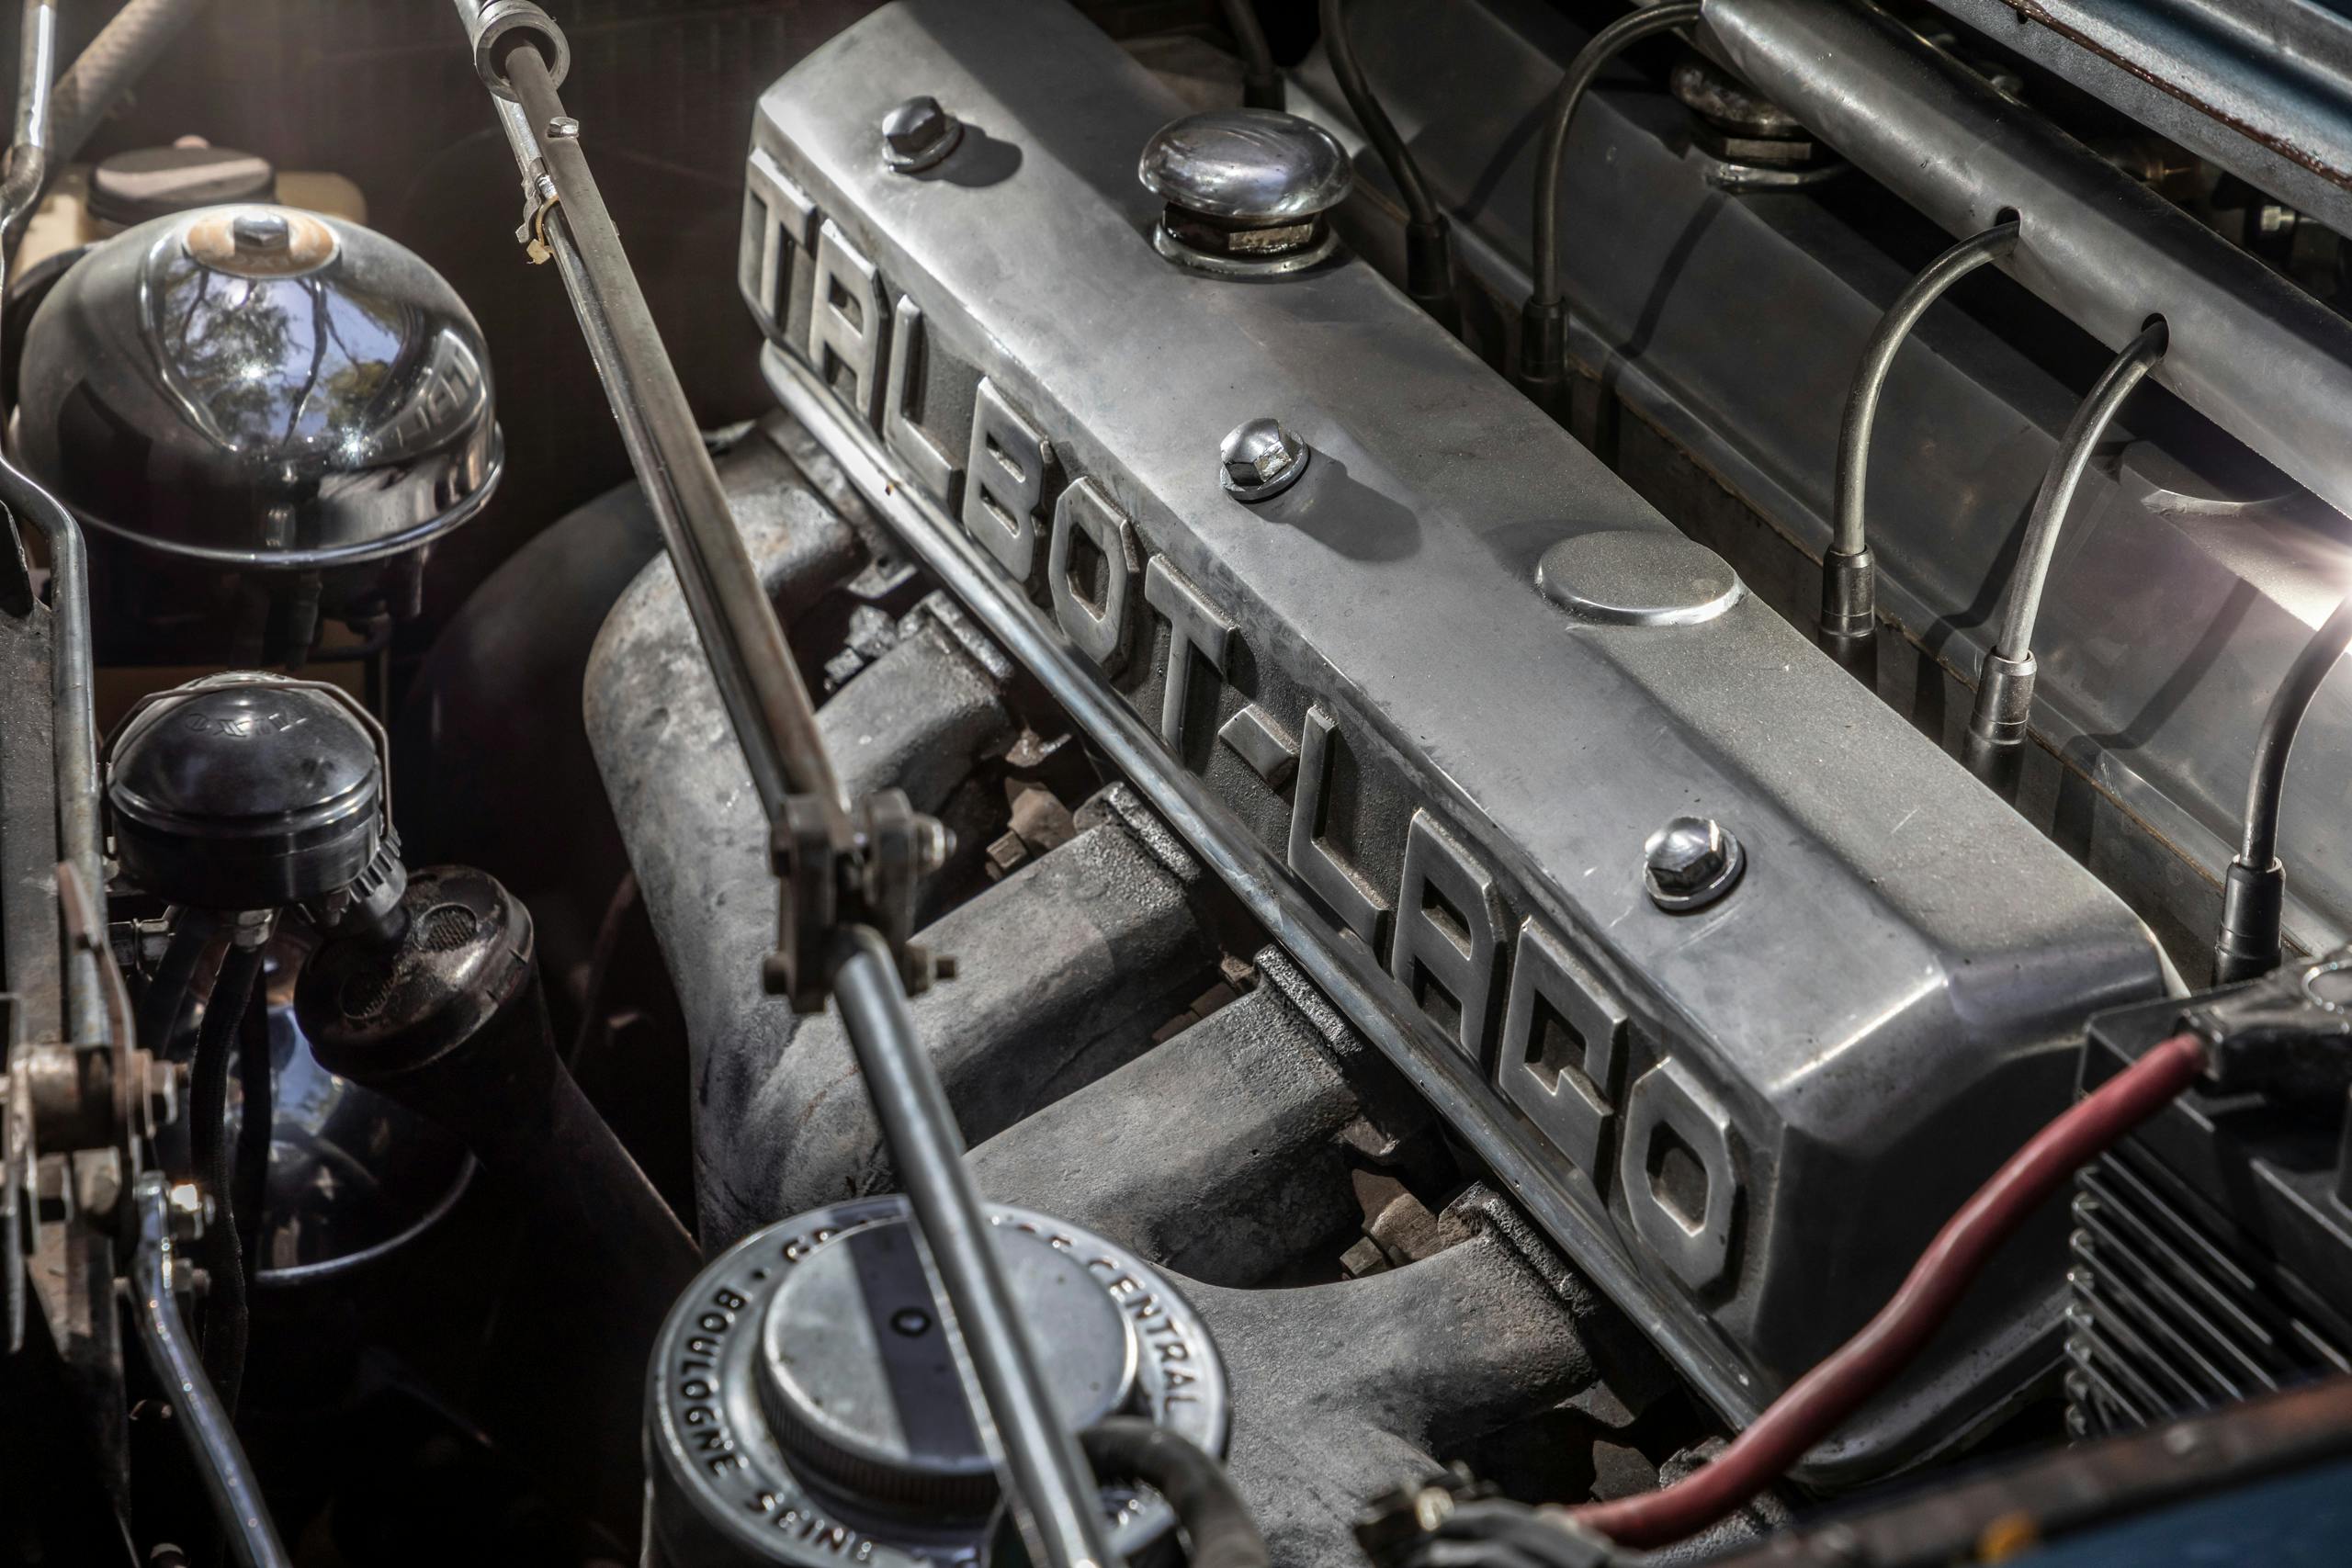 1949 Talbot-Lago T26 Grand Sport engine valve cover